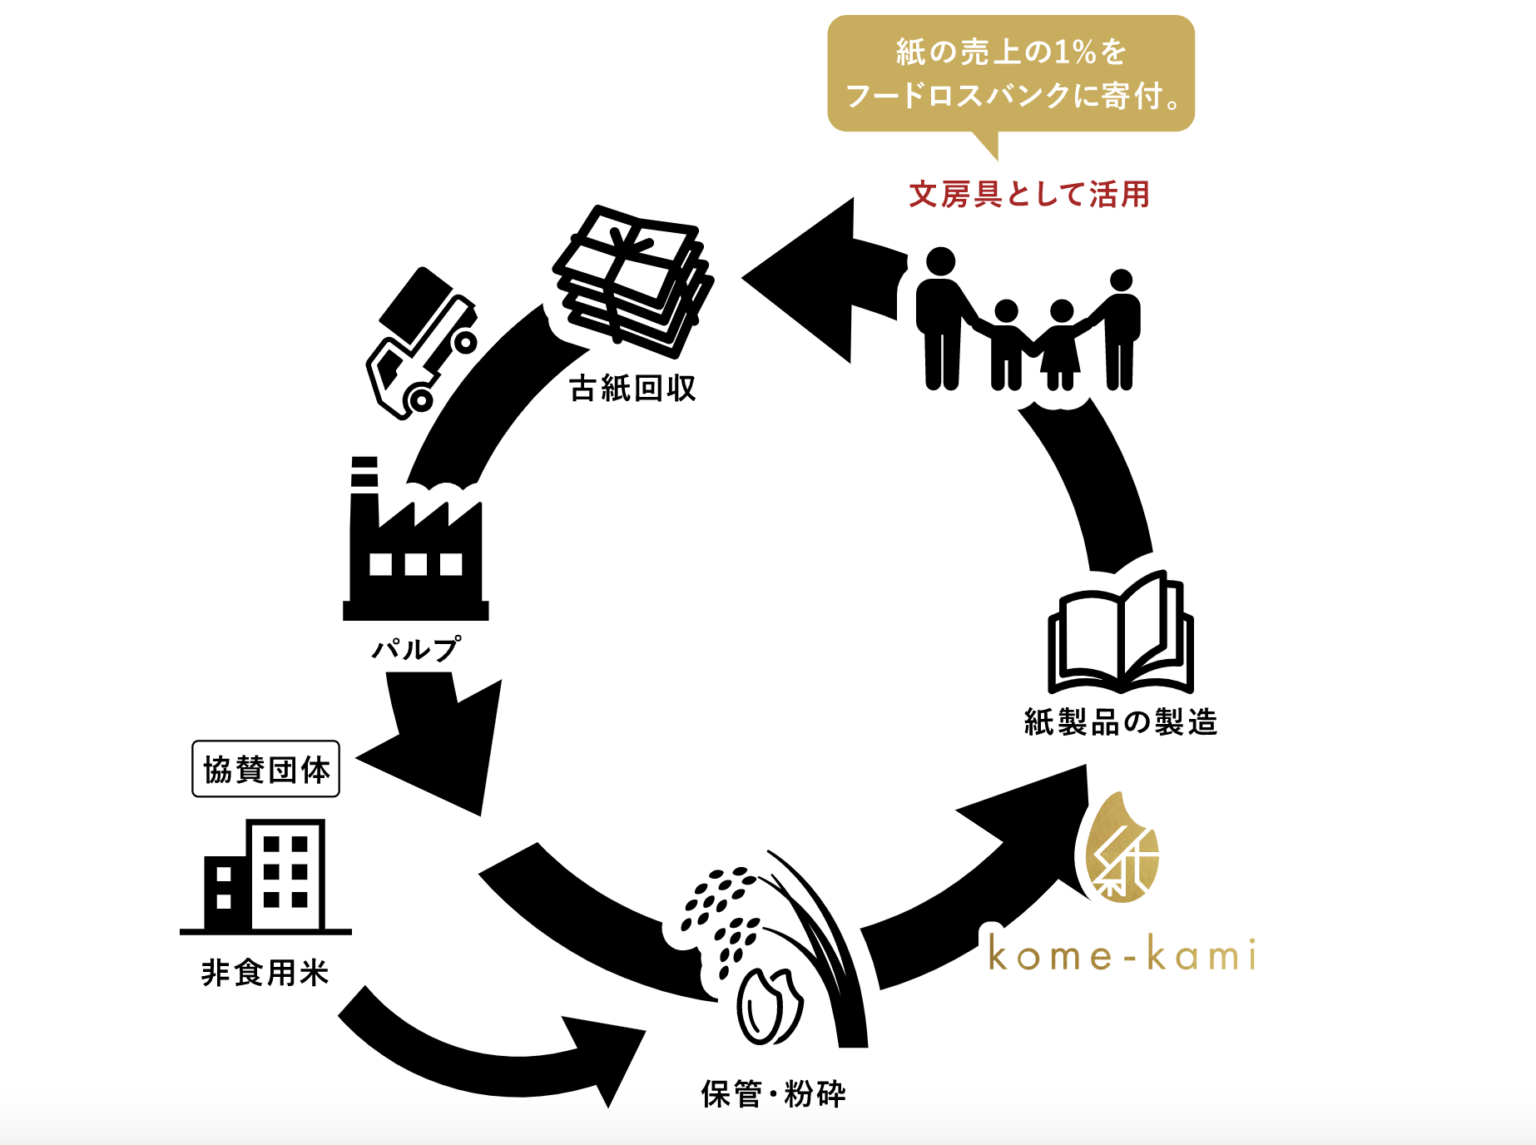 「kome-kami」を使った後は古紙として循環されるため、再生紙として再び生まれ変わるシステムに。